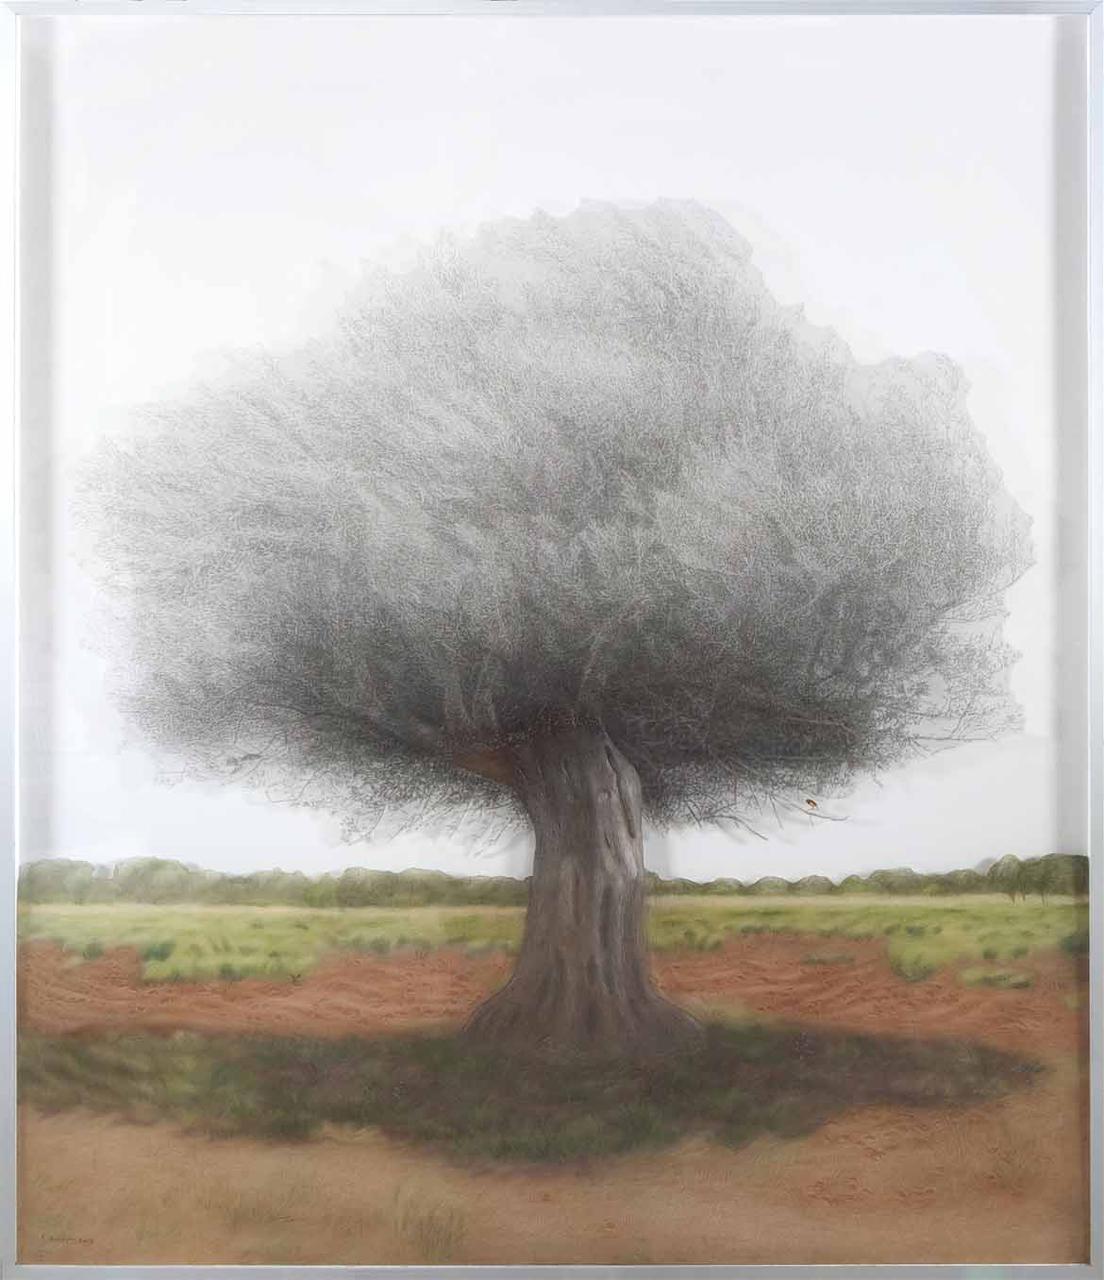 Olive Tree2, plexiglass dust and charcoal on transparent film, 169 x 200 cm, 2015